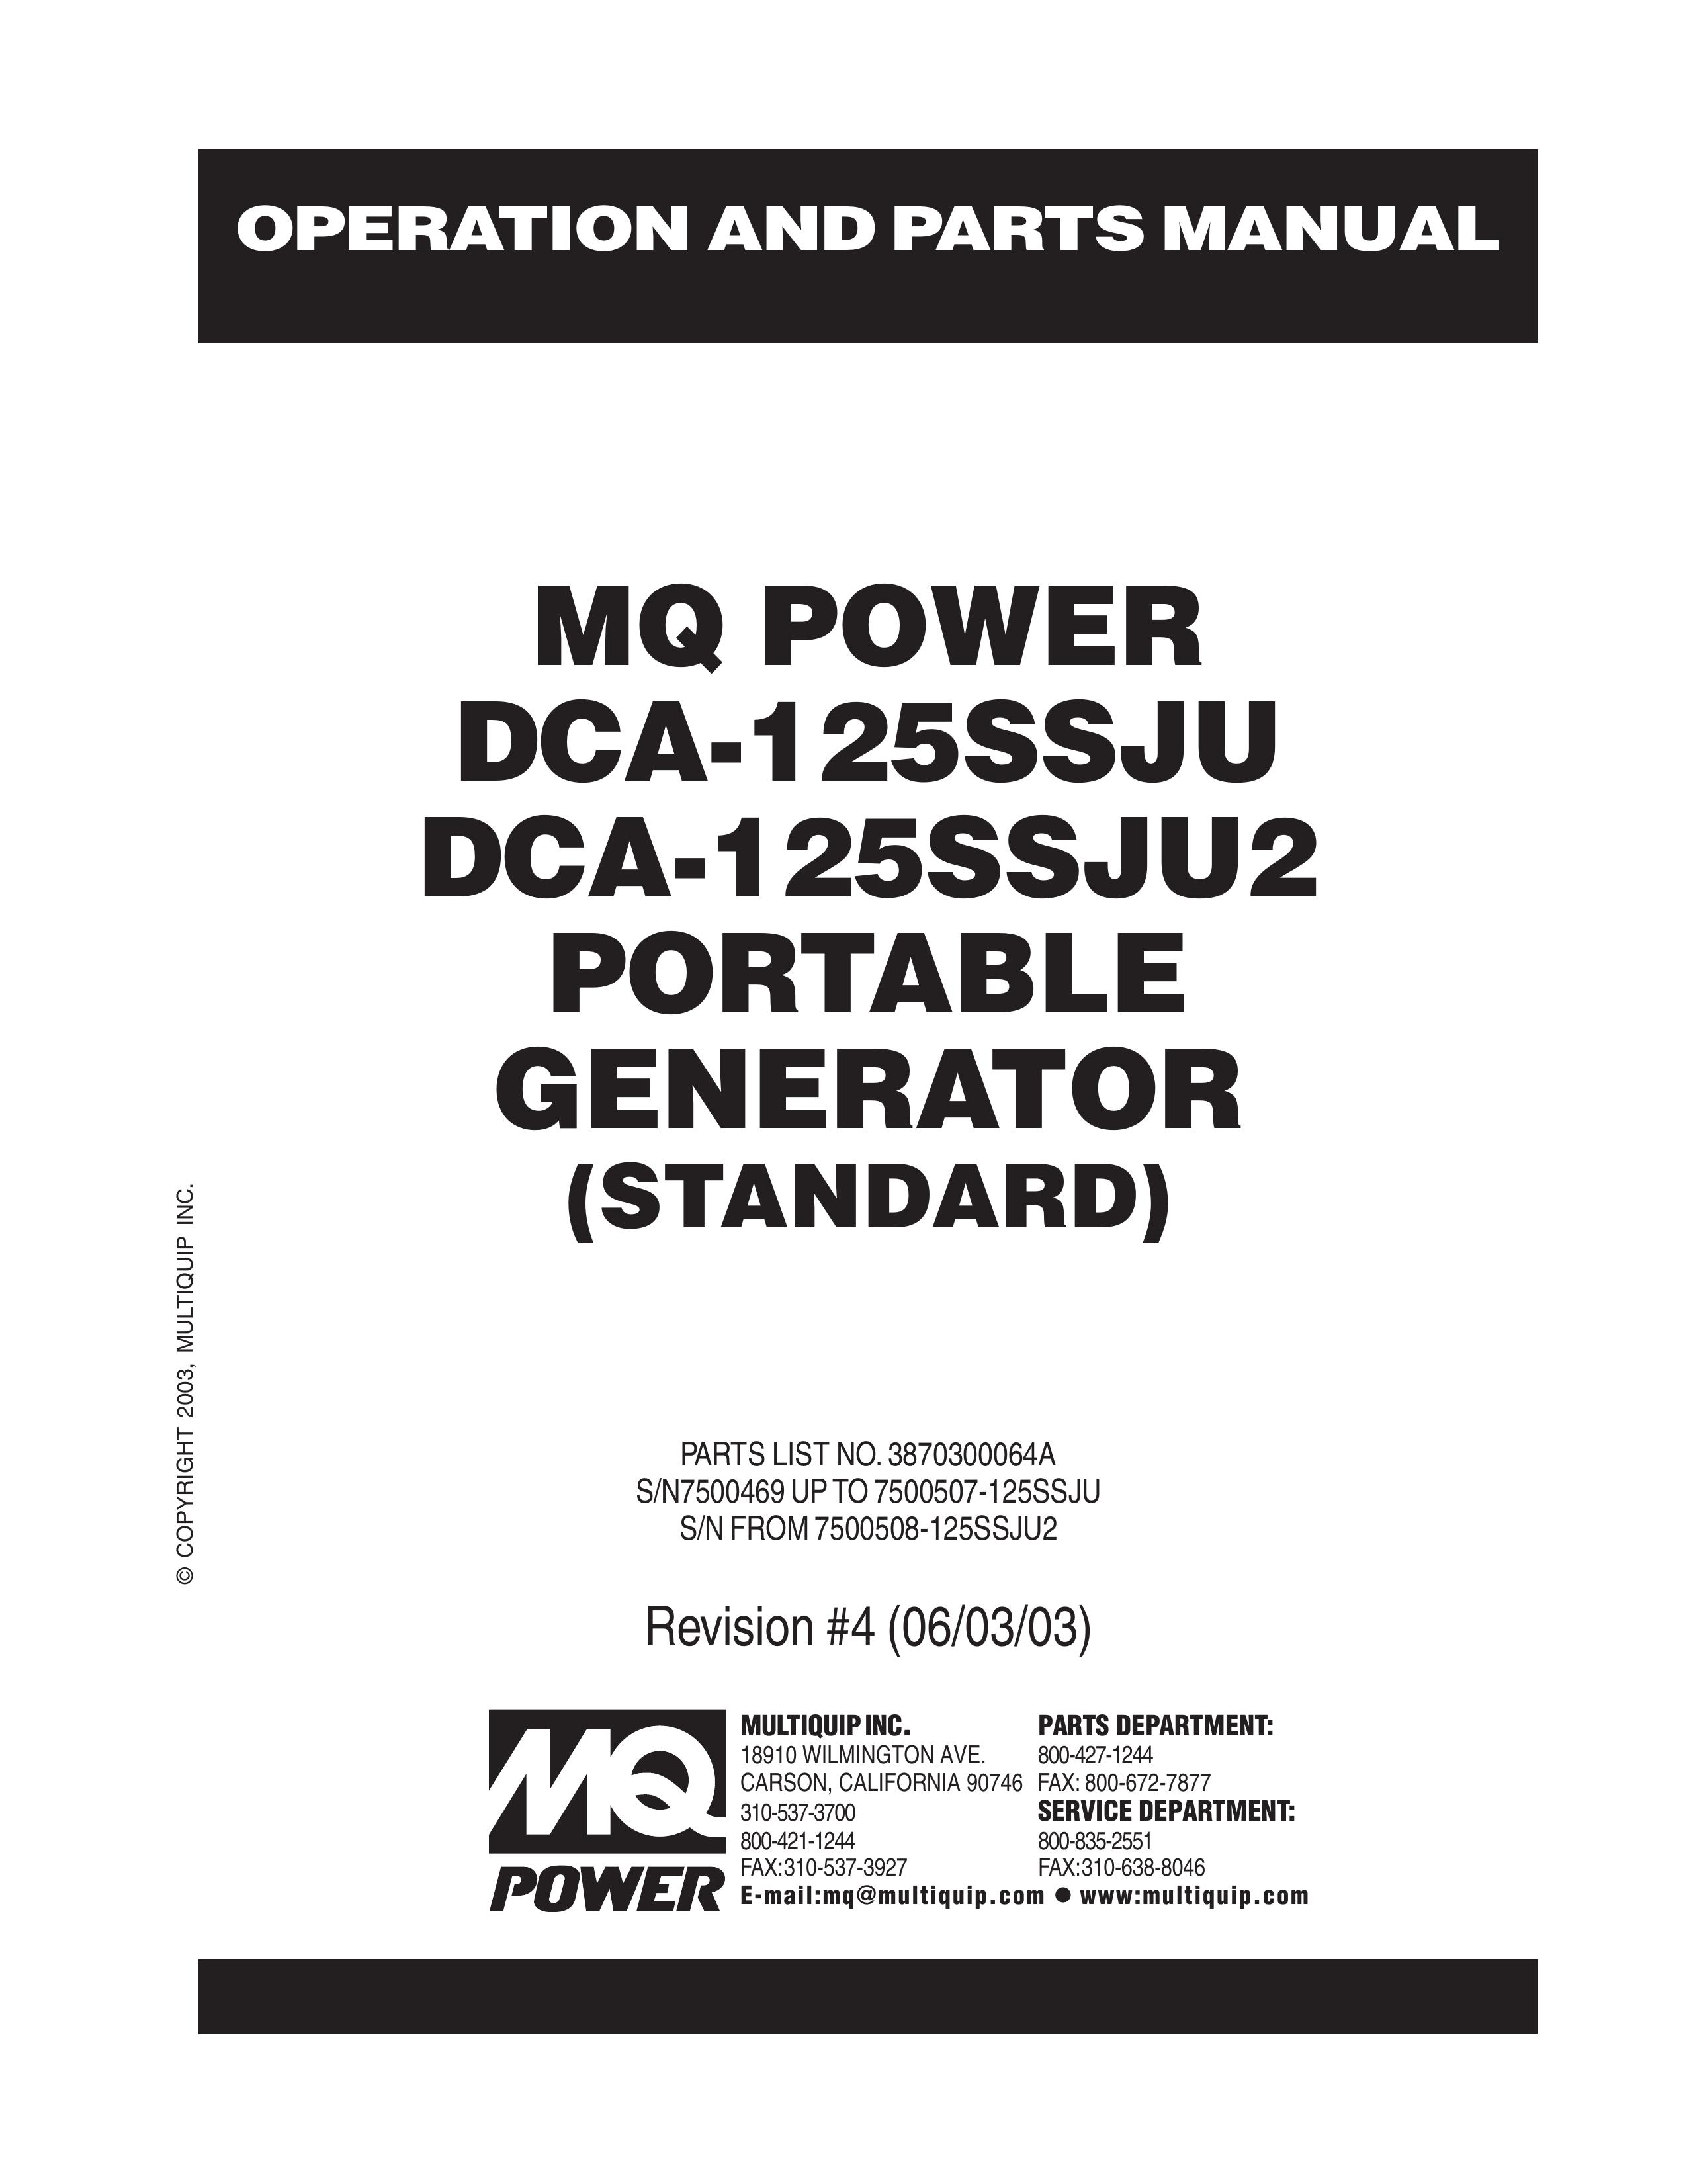 Multiquip DCA-125SSJU Portable Generator User Manual